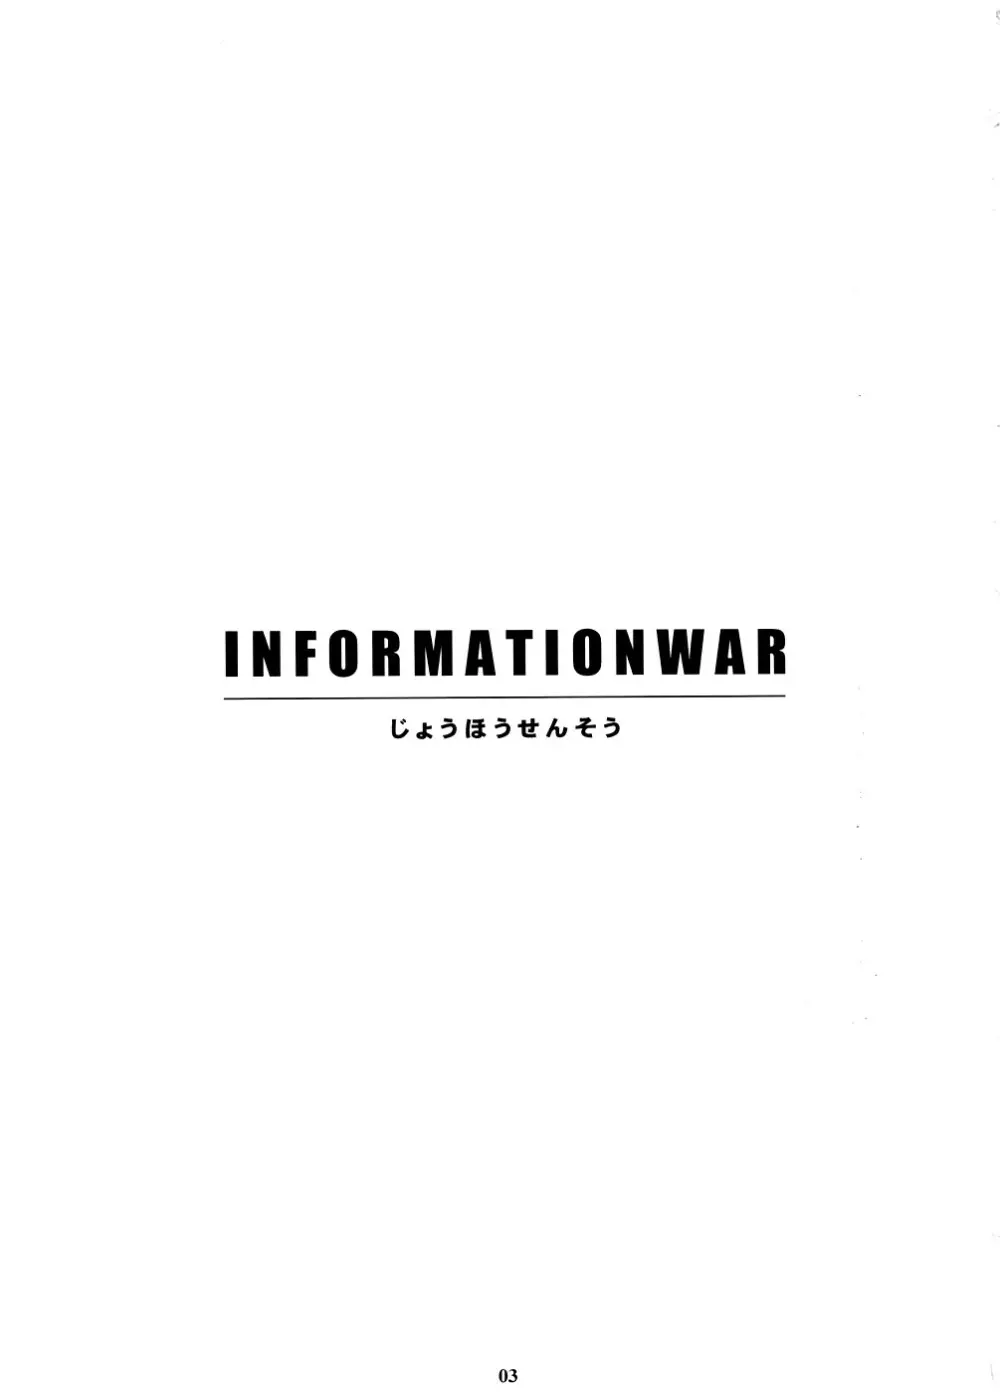 INFORMATION WAR 2ページ